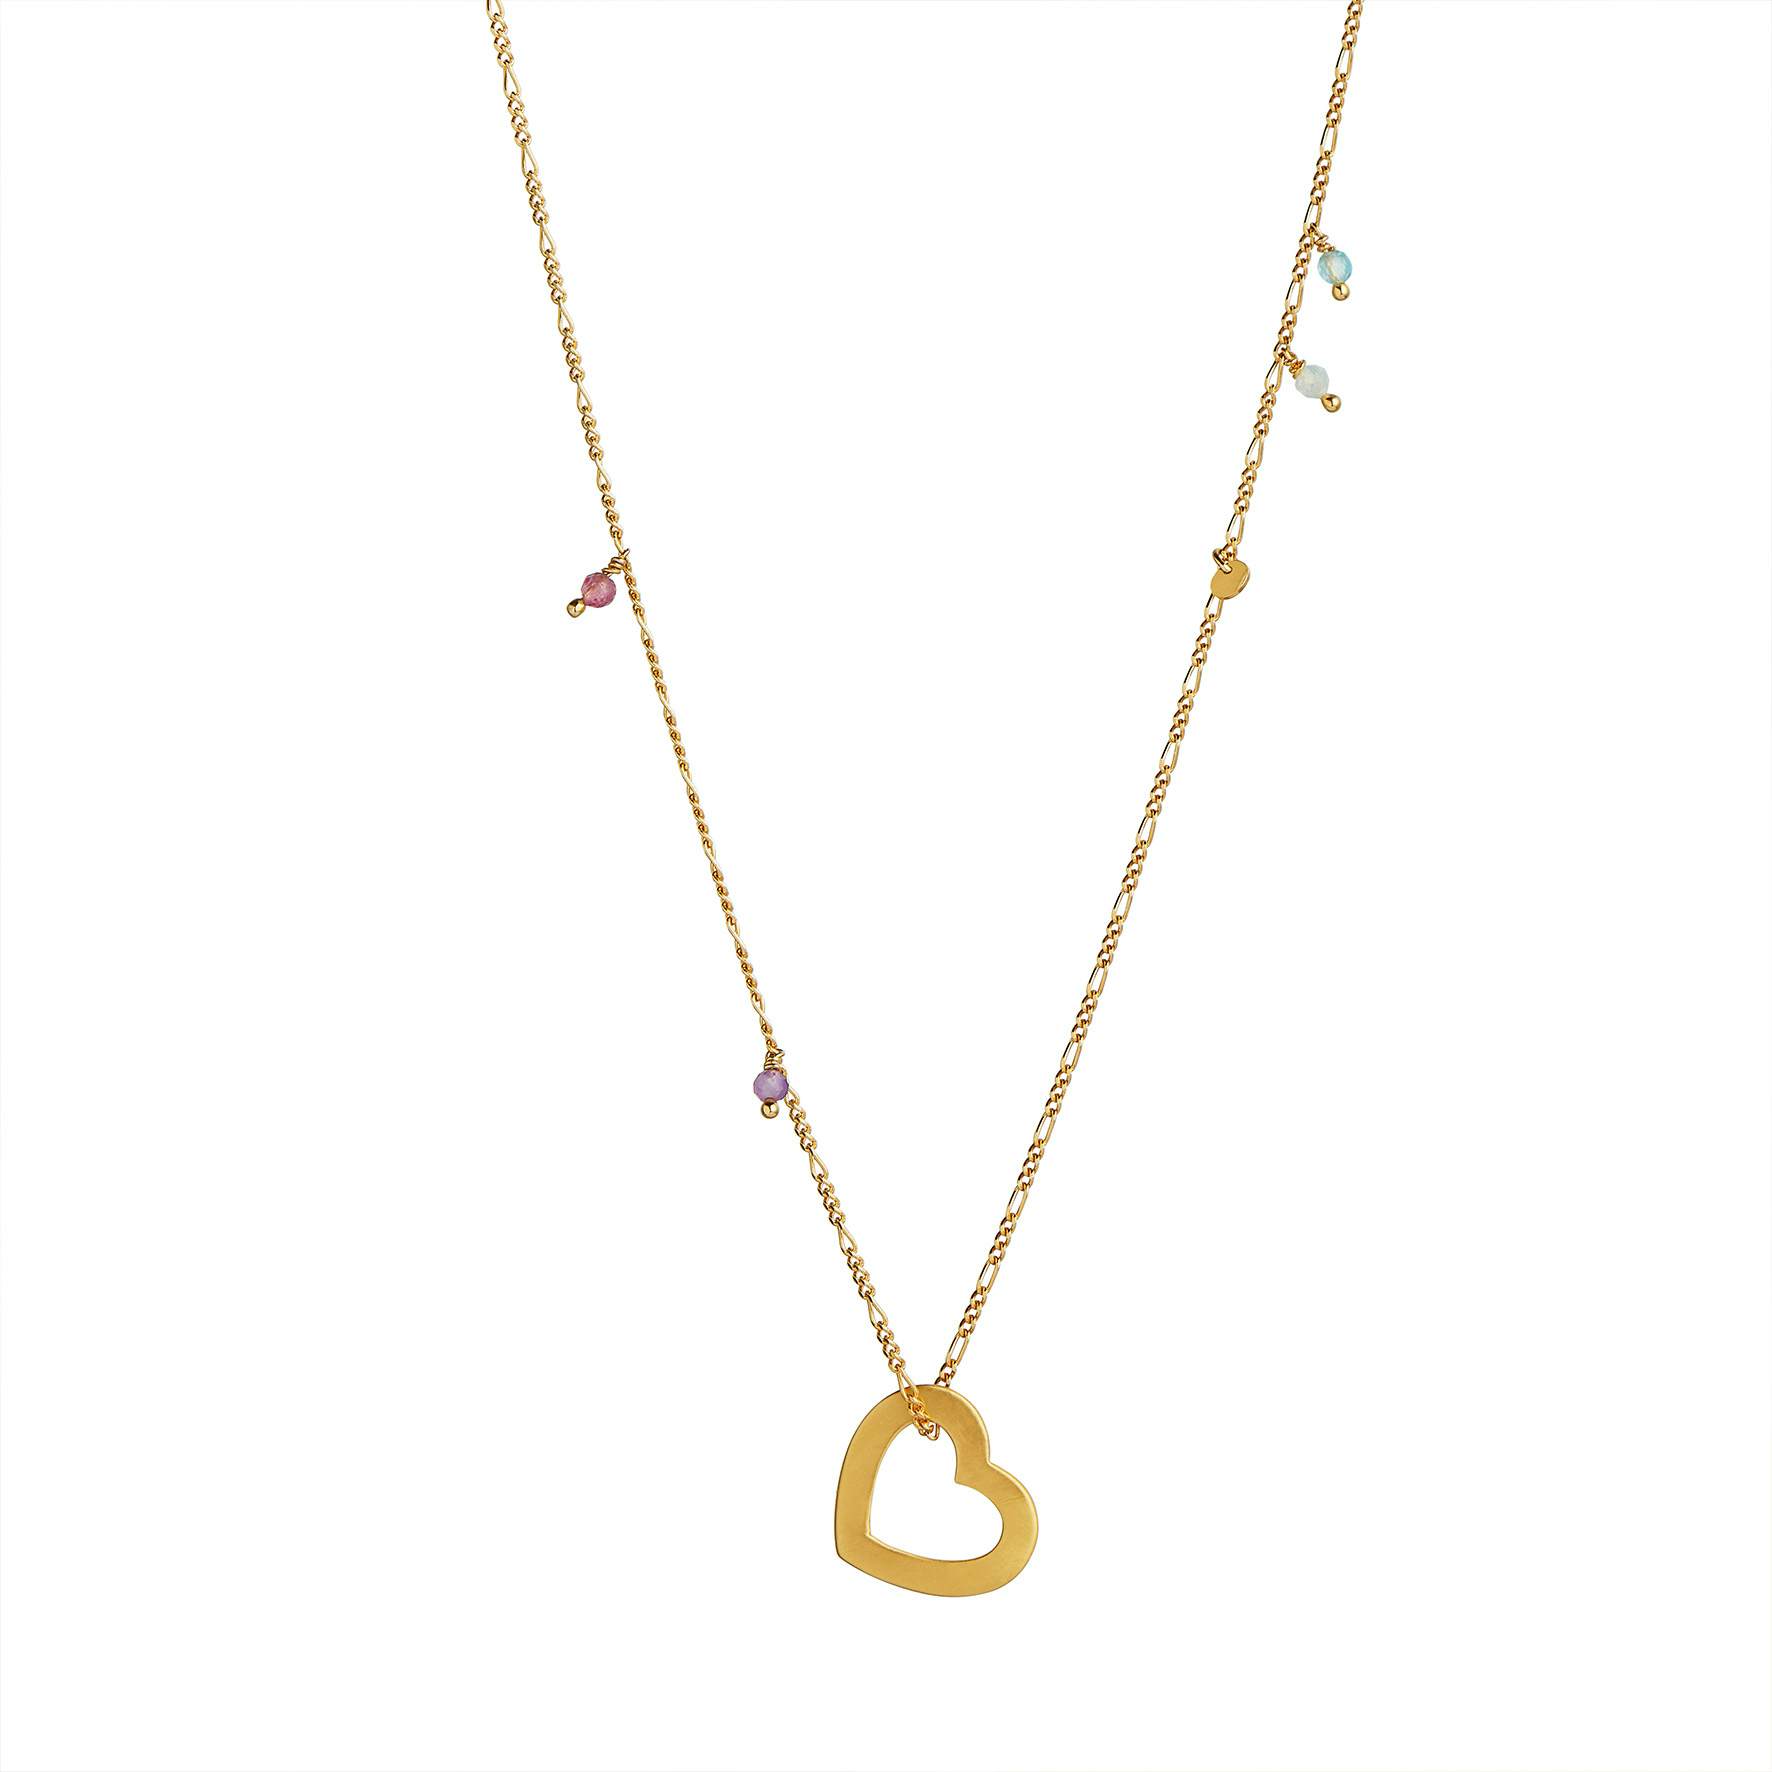 Open Love Heart Pendant von STINE A Jewelry in Vergoldet-Silber Sterling 925